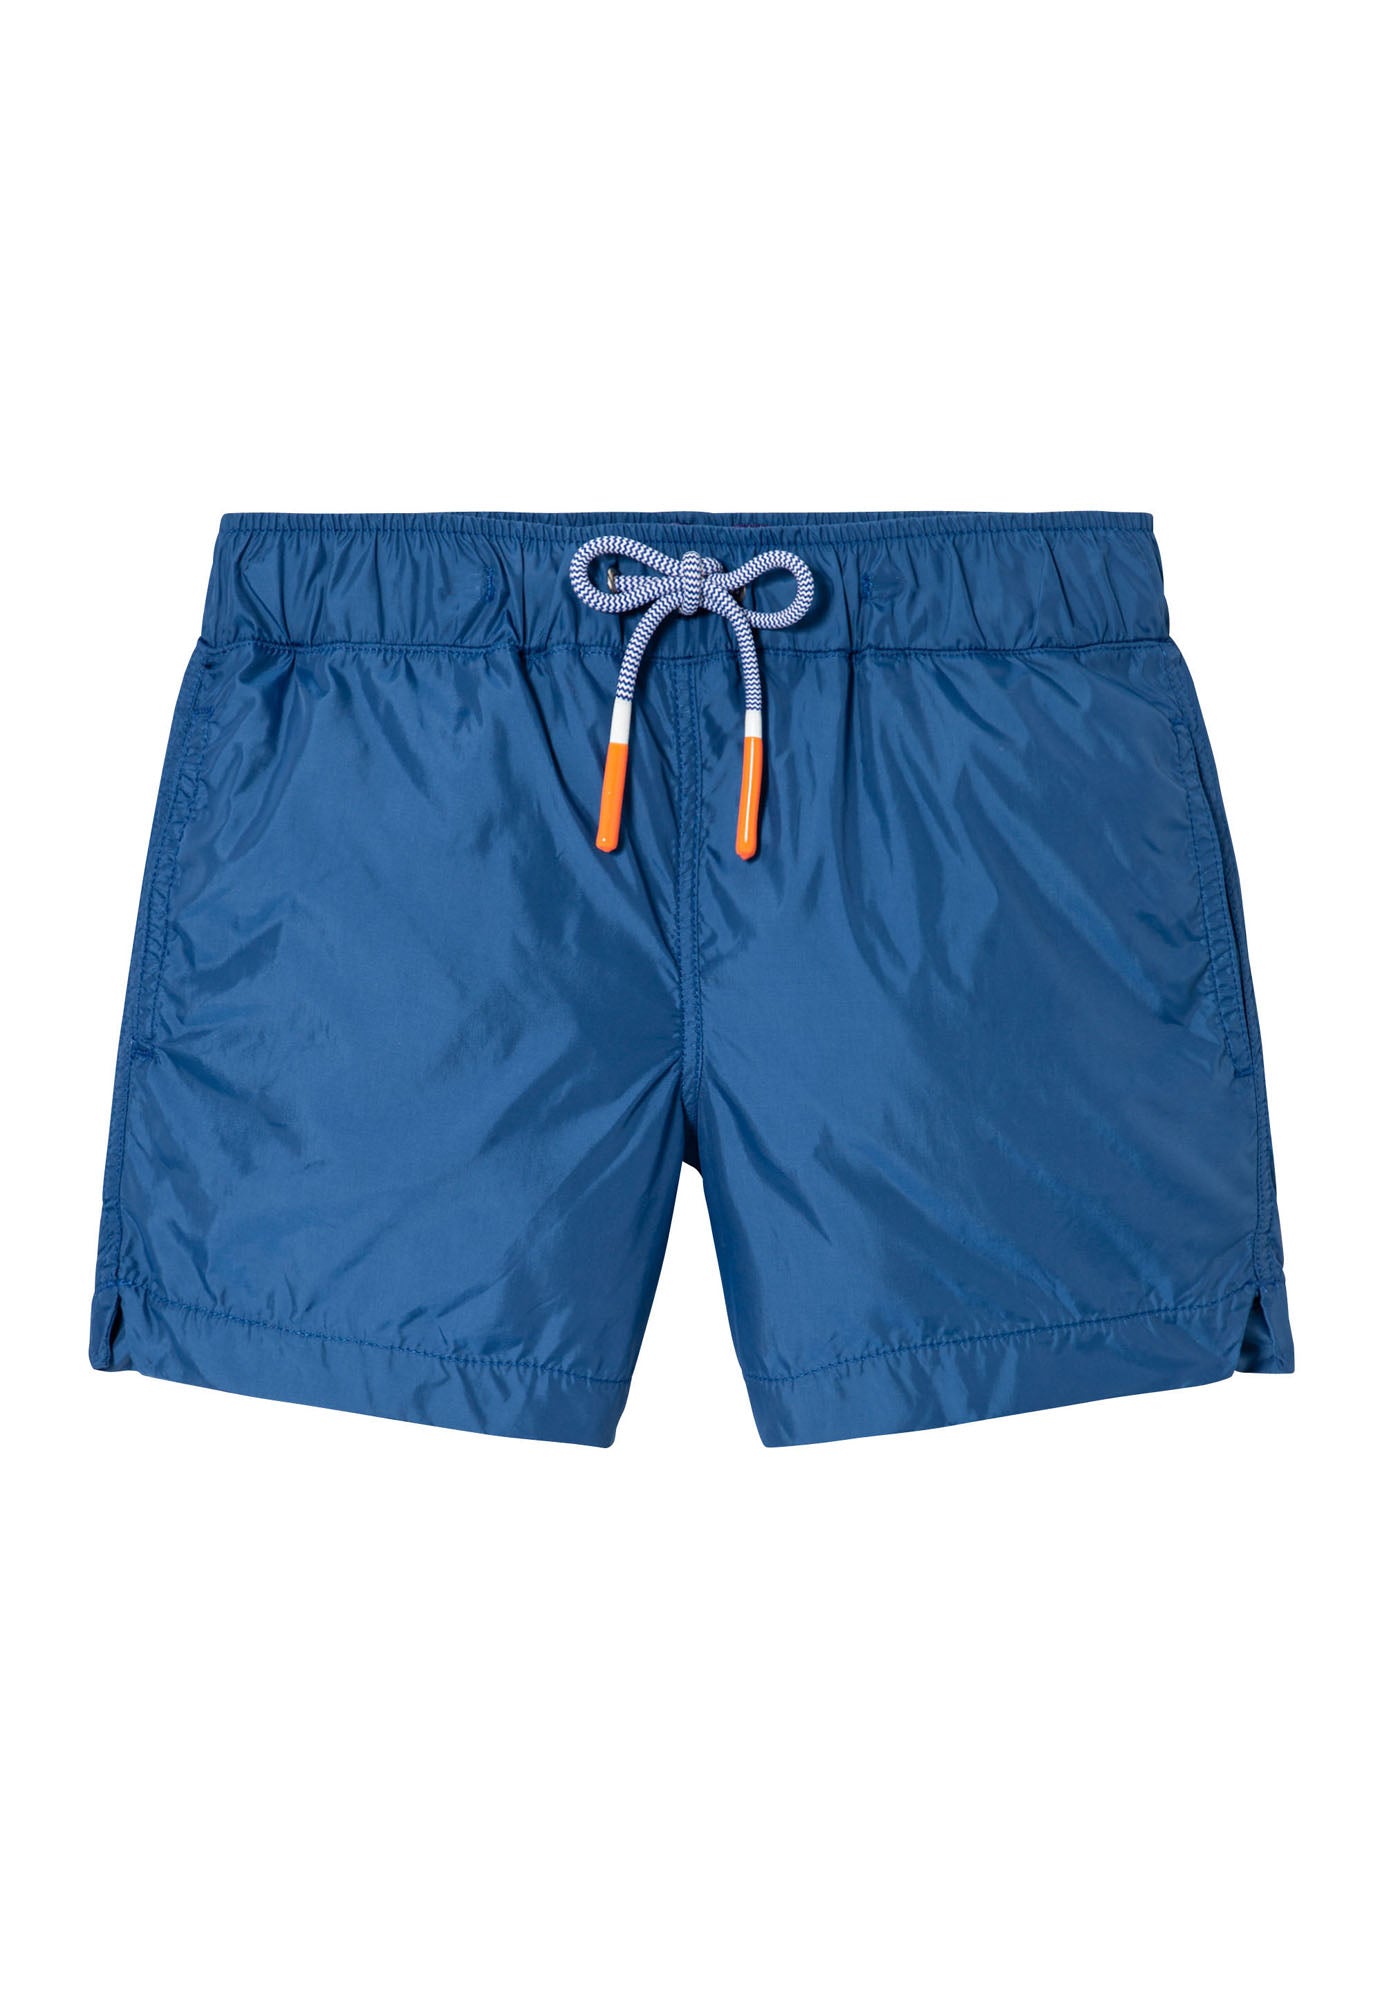 Boys' swim trunks, indigo blue